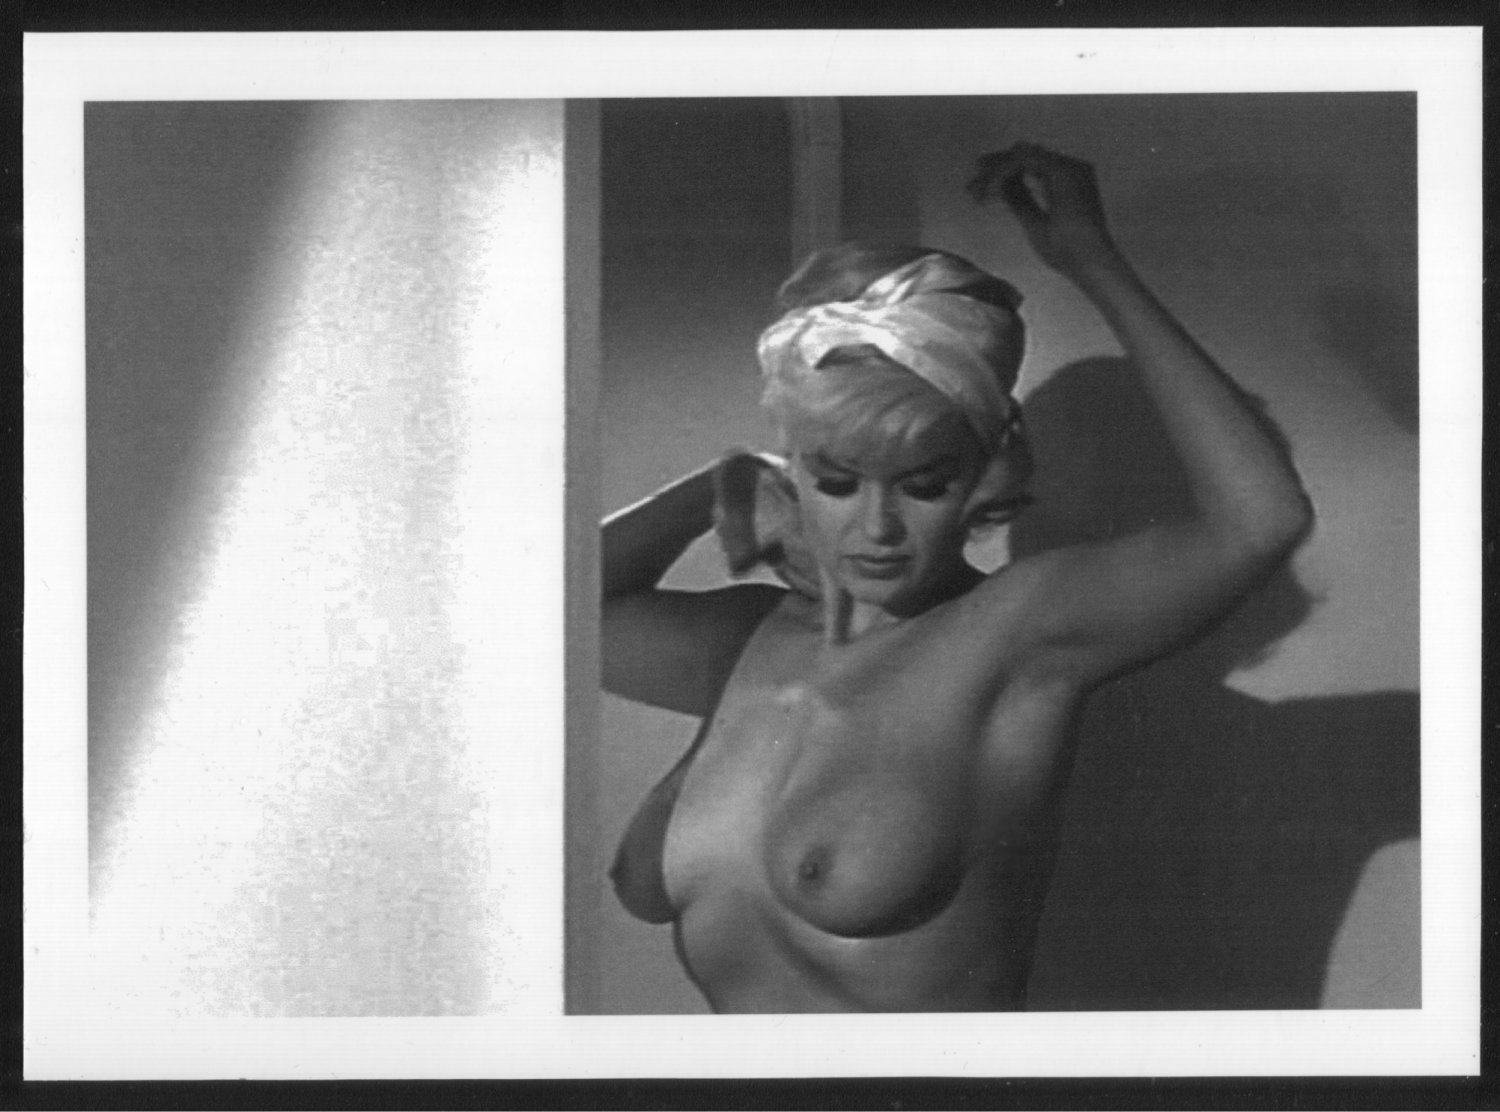 Actress jayne mansfield topless nude huge breasts new reprint 5X7 #4.